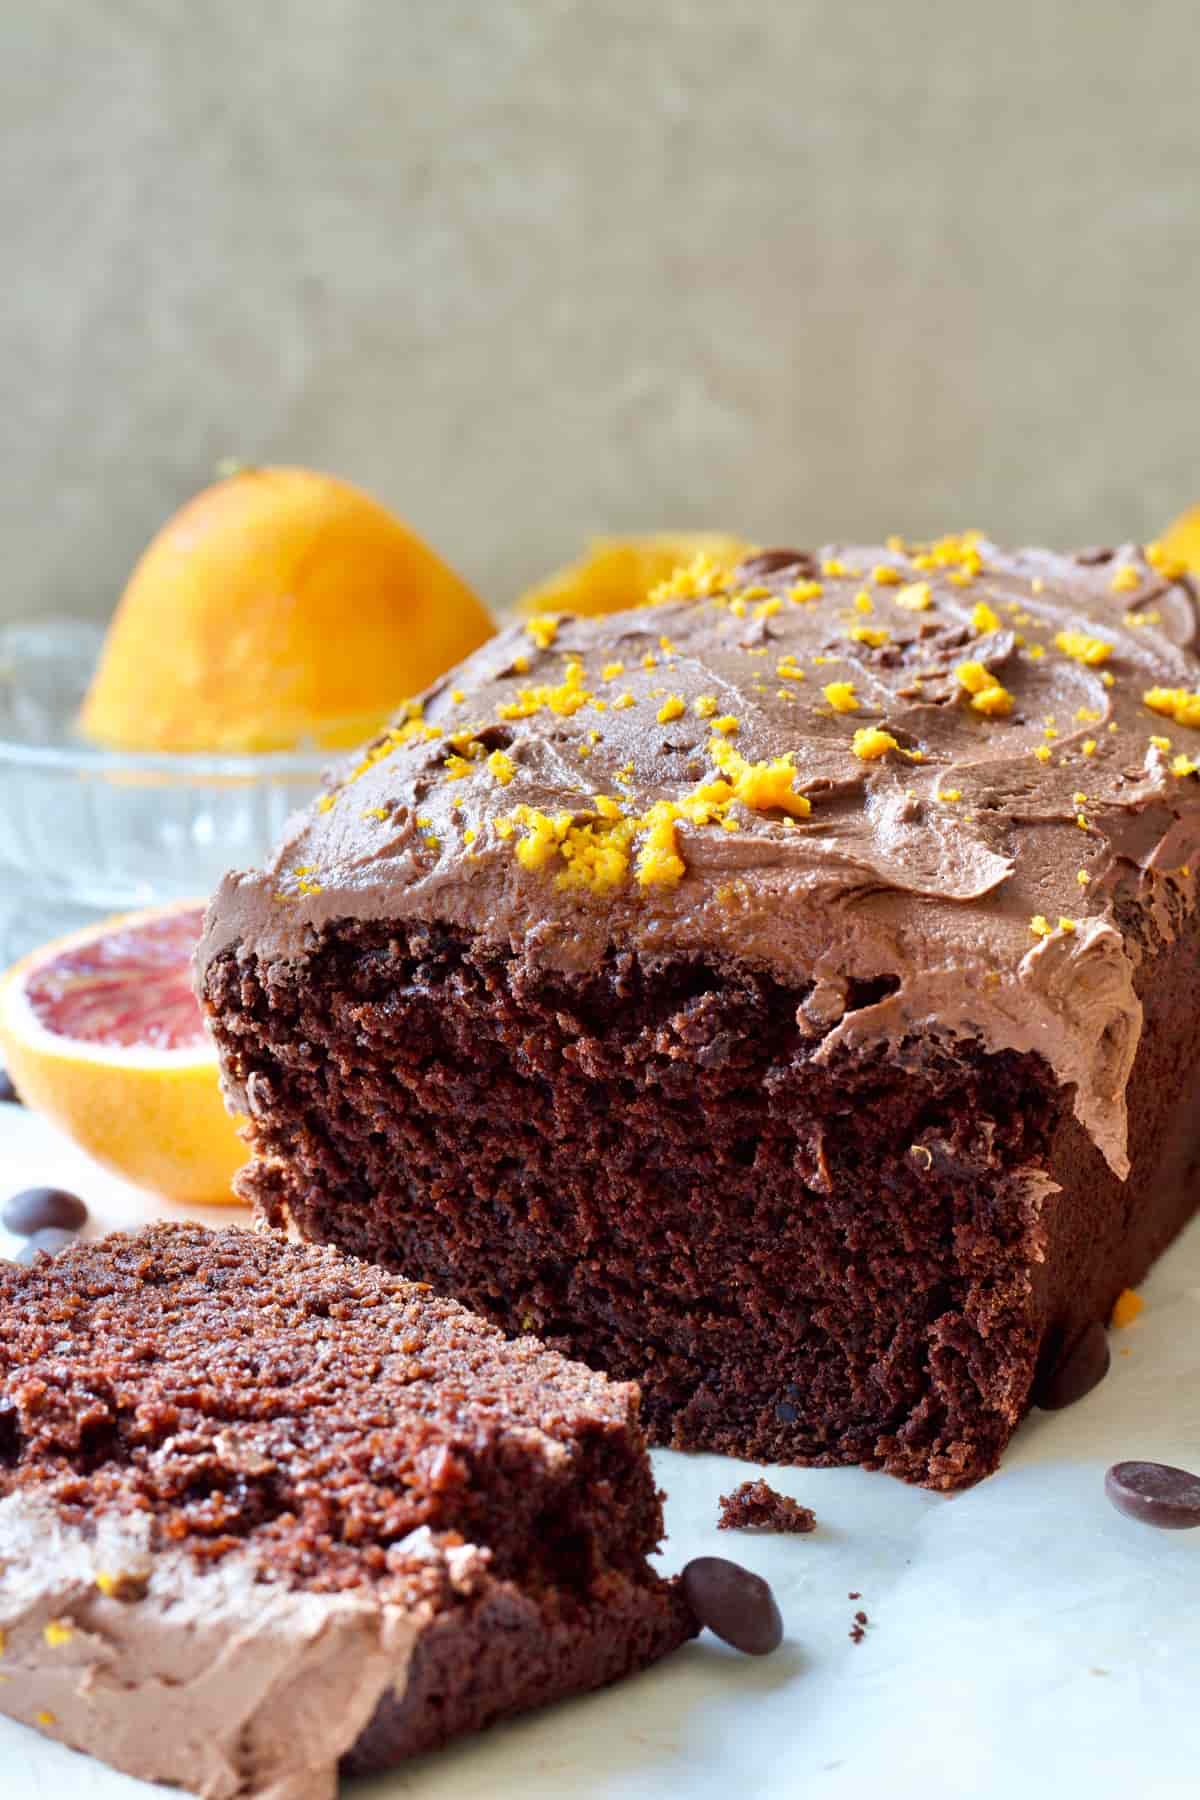 Vegan chocolate orange cake & slice with oranges in the background.